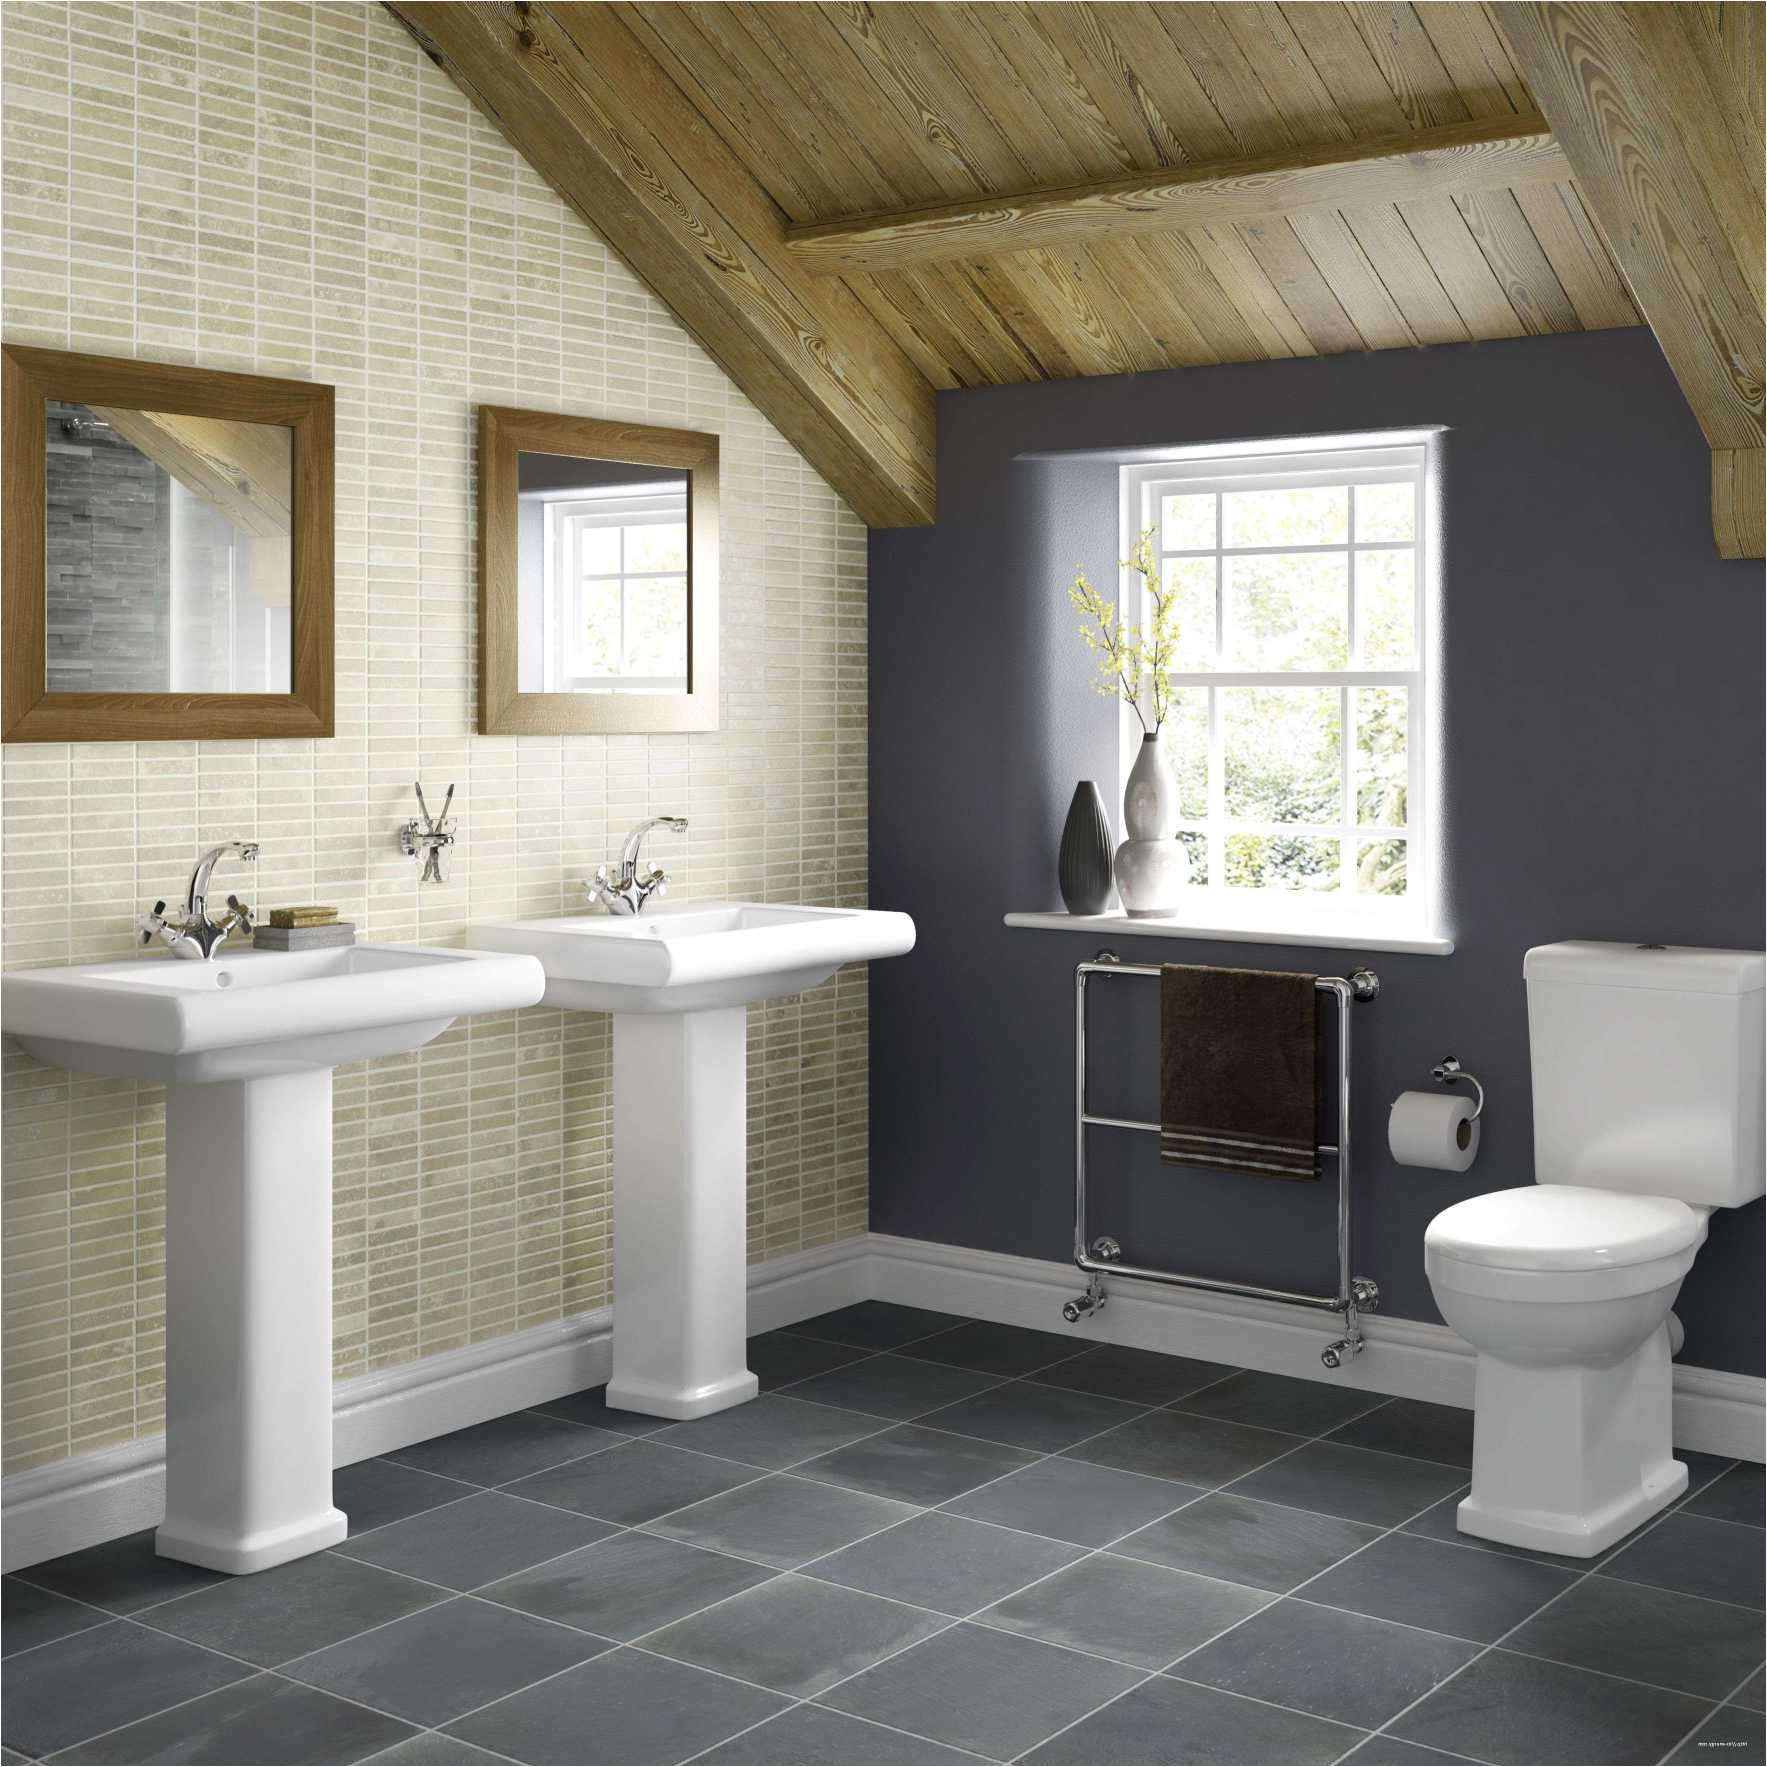 porcelanosa bathroom lovely fresh bathroom picture ideas lovely tag toilet ideas 0d best of 25 best